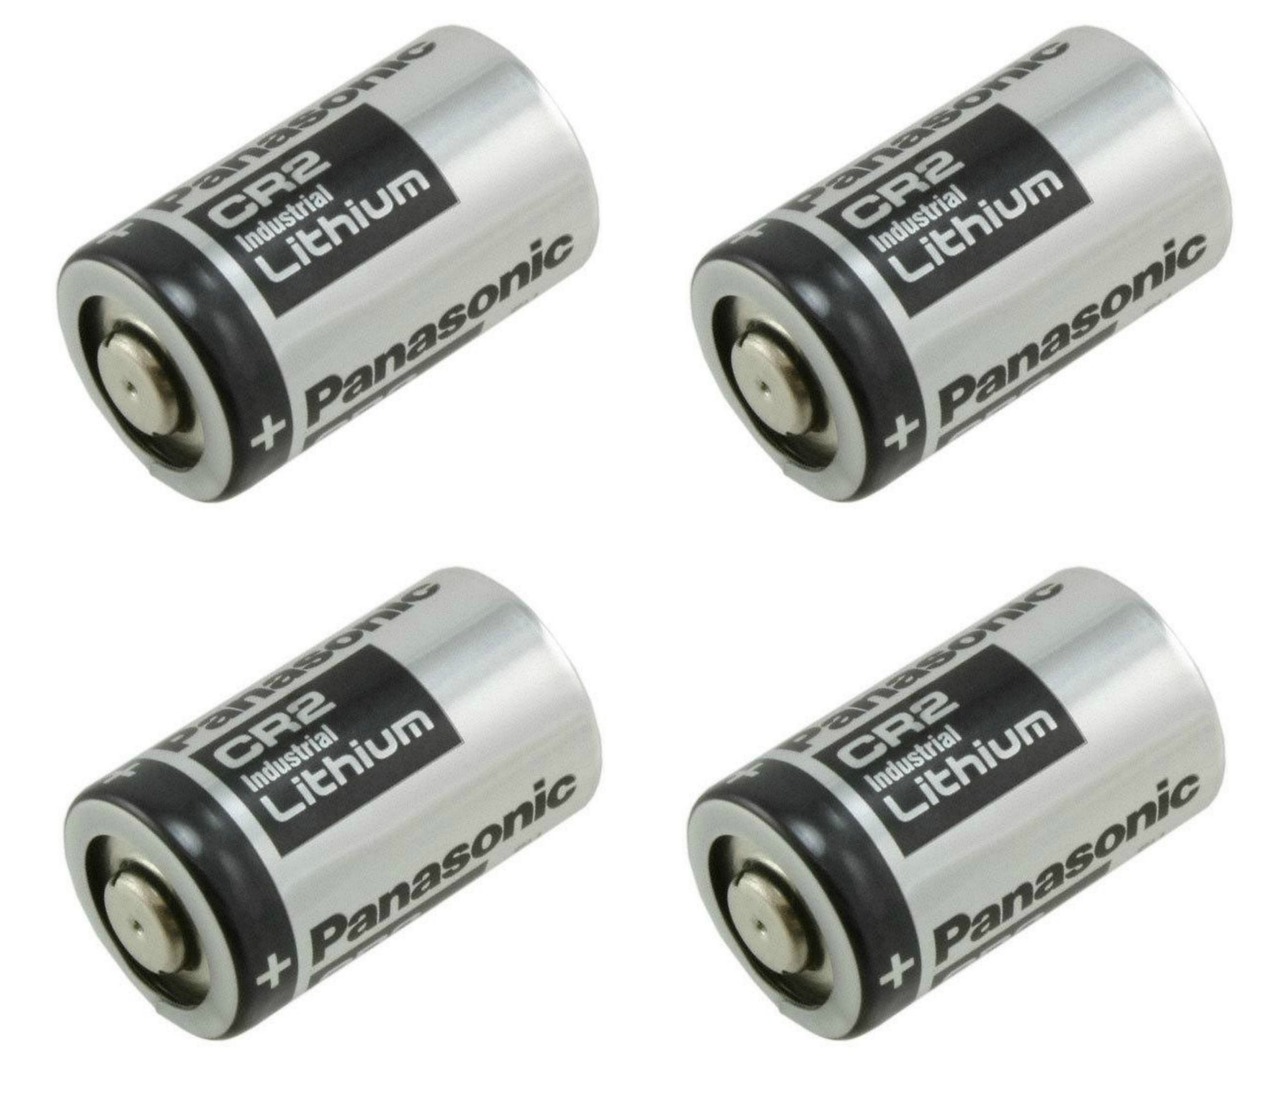 Panasonic CR2 3.0V Photo Lithium Battery - 4 Pack + FREE SHIPPING!